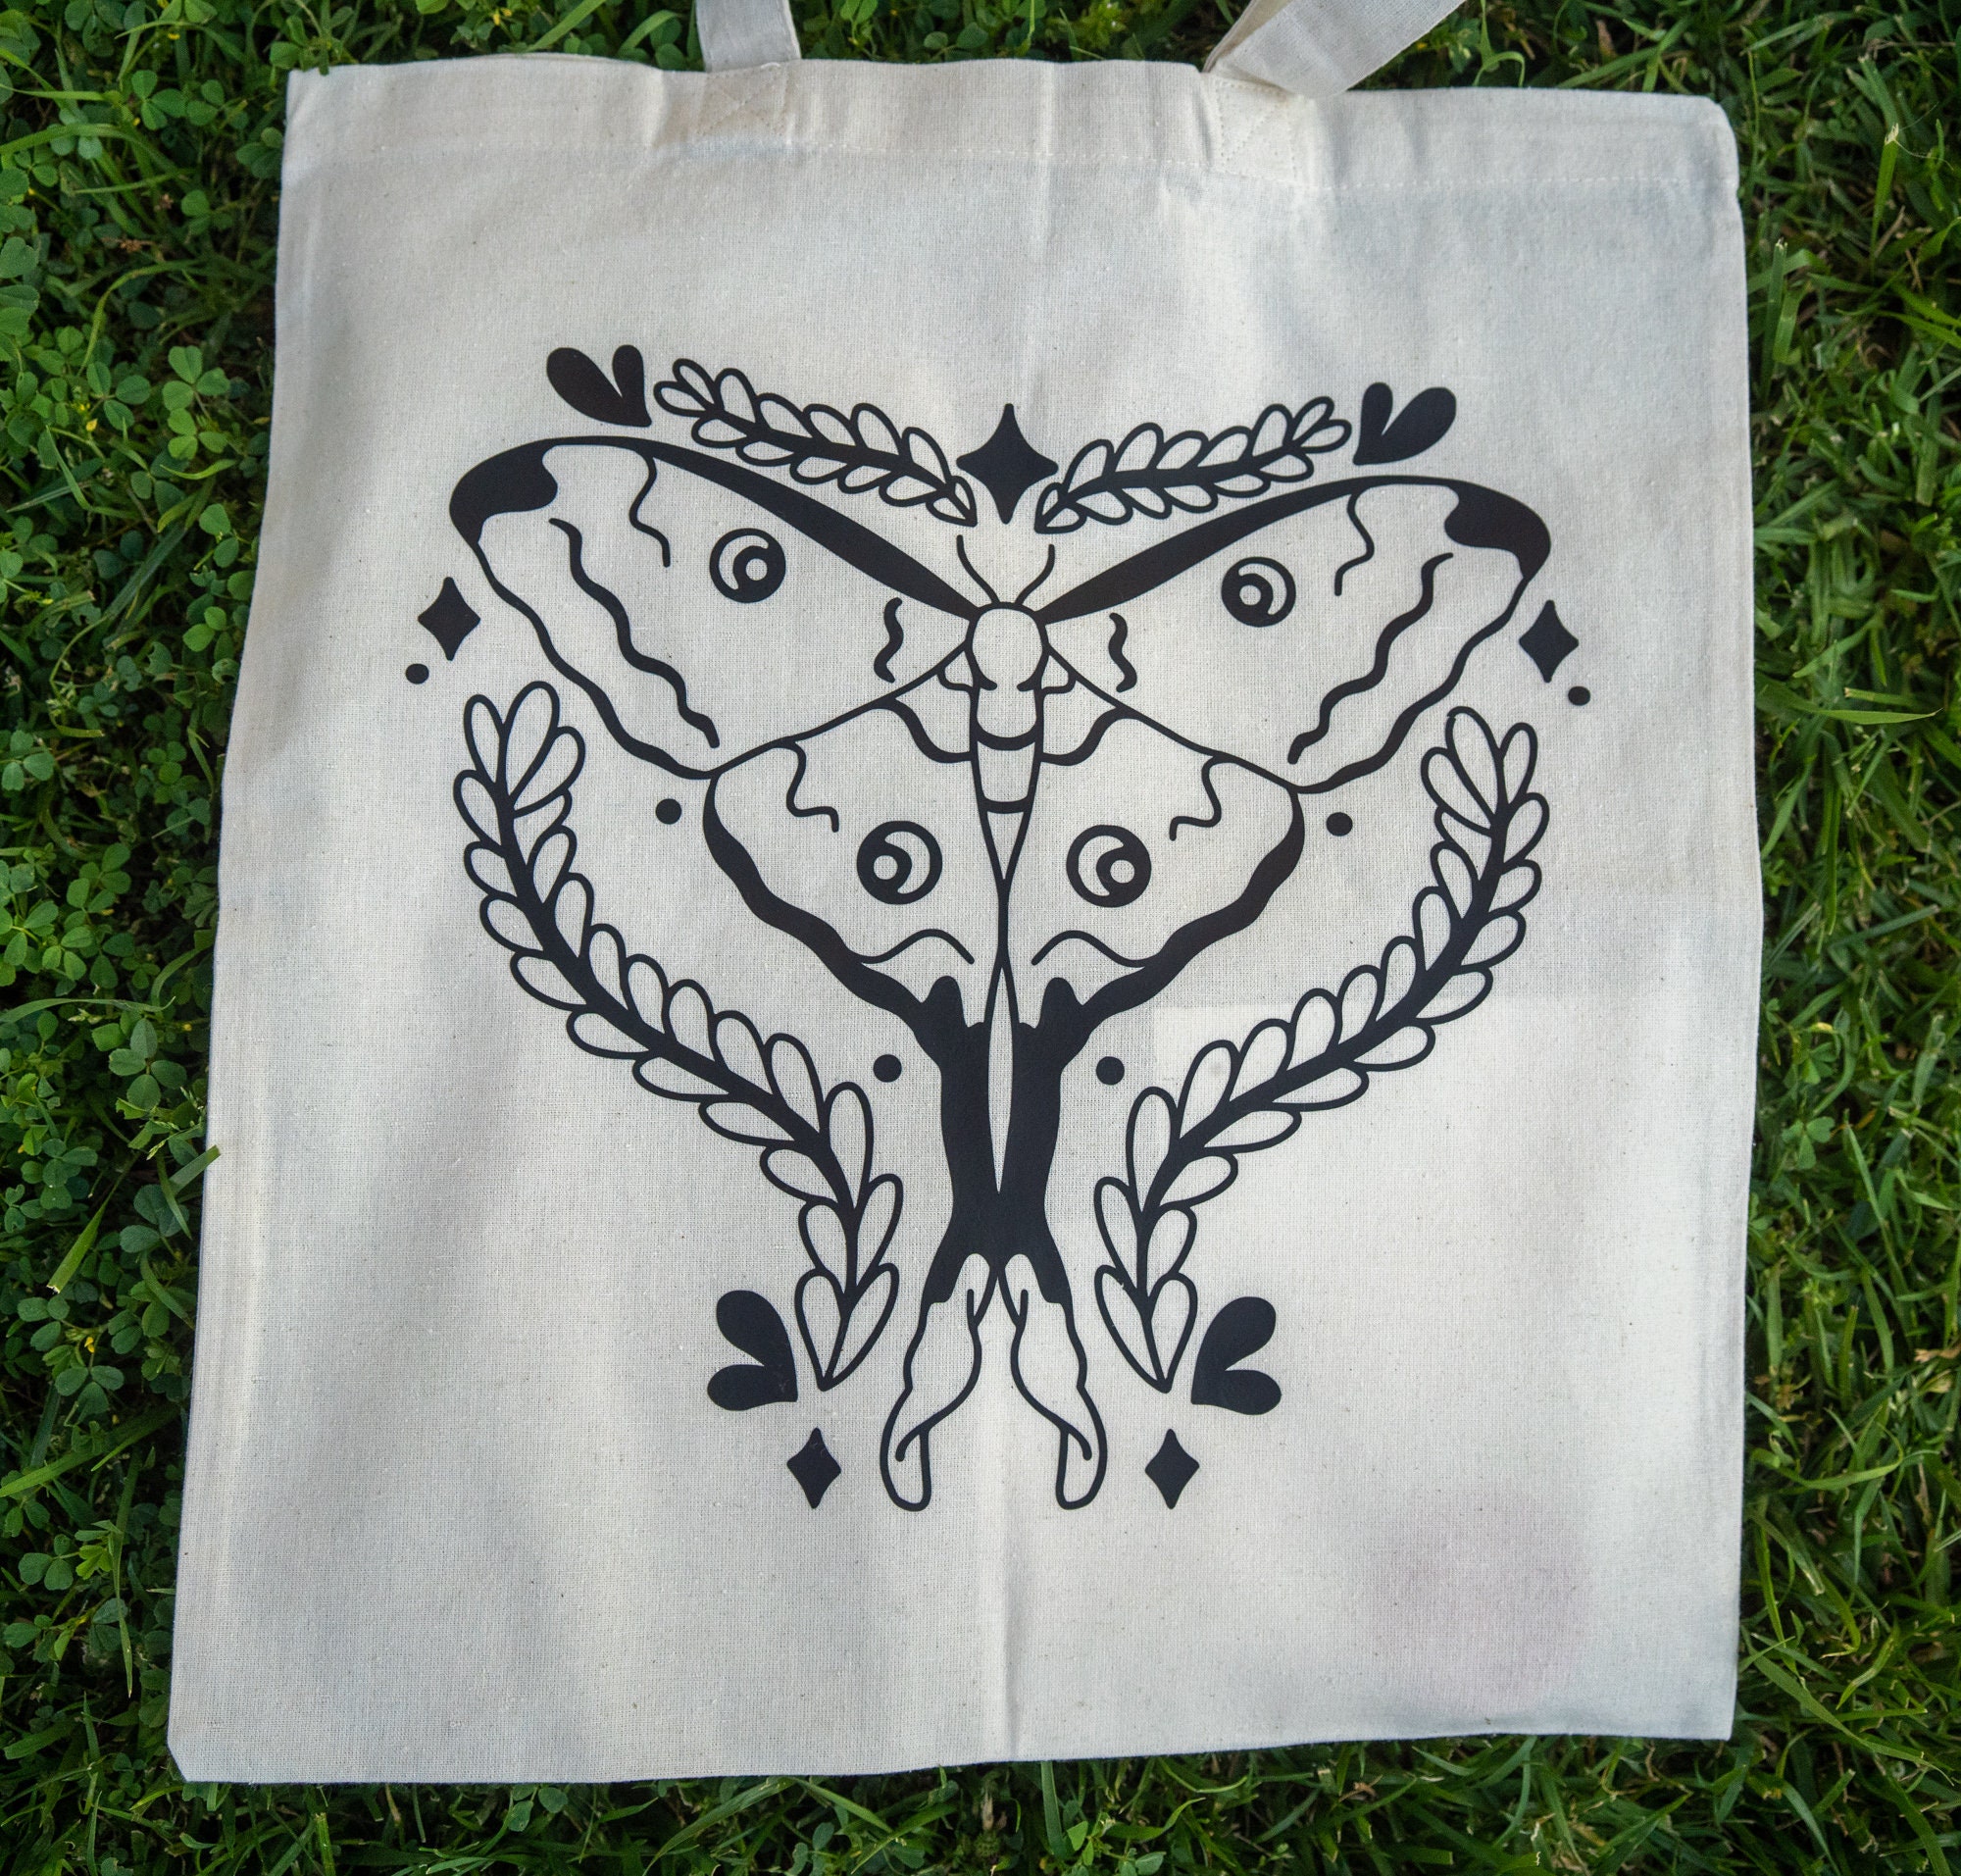 Salem Moth pvc vinyl bag, Crossbody purse with moth